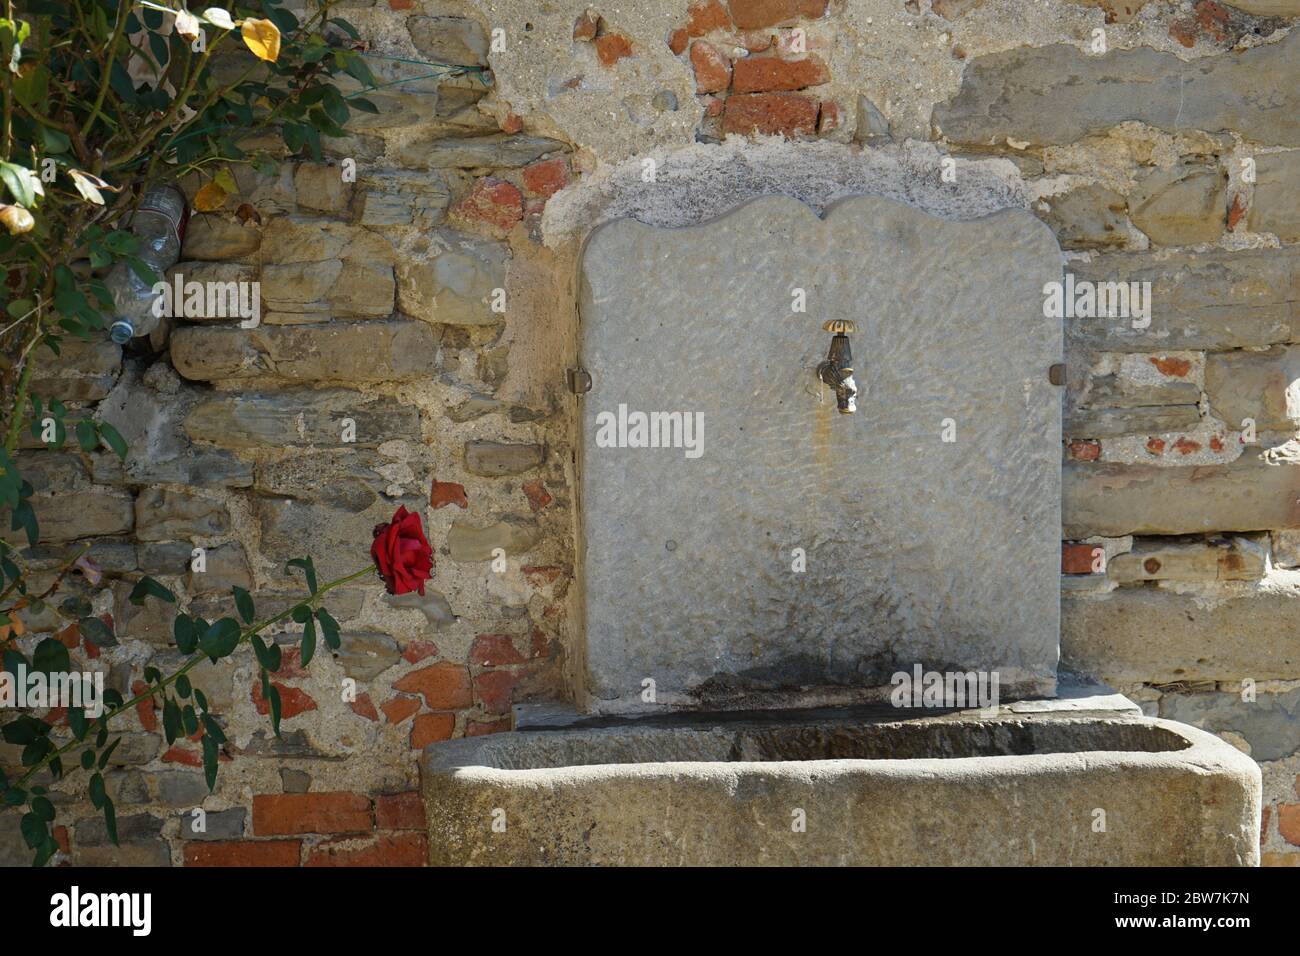 A stone fountain at Murazzano, Piedmont - Italy Stock Photo